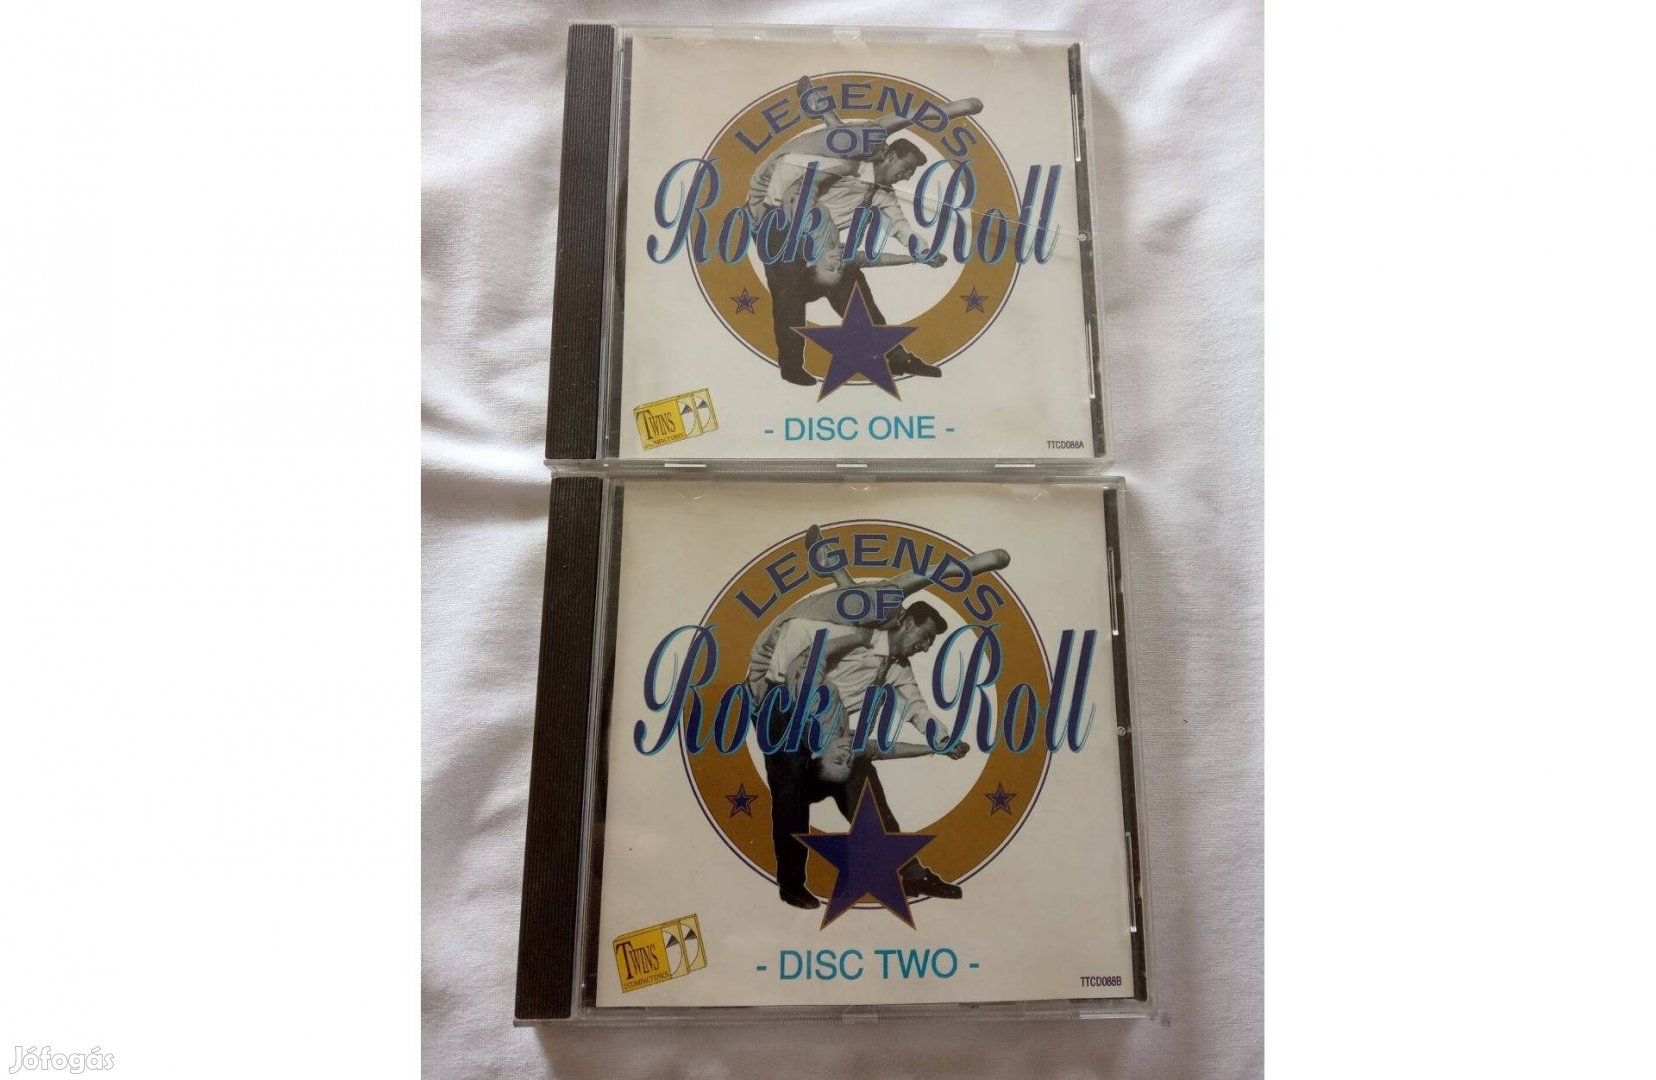 Legends Of Rock N Roll dupla karcmentes dupla cd